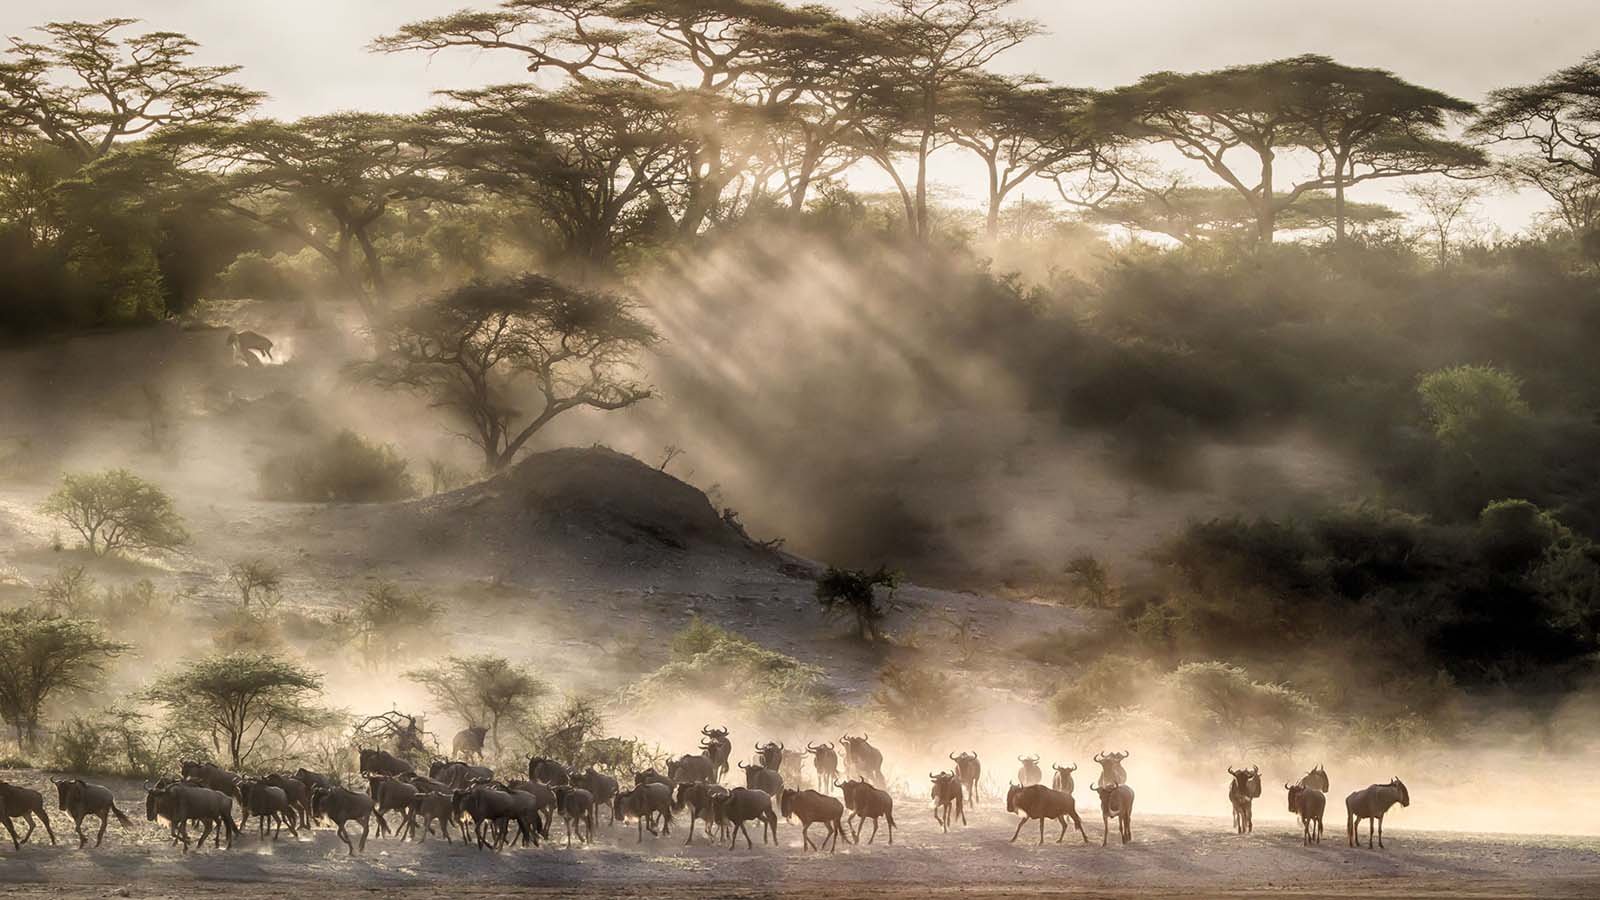 Wildebeests migrating in Serengeti National Park Tanzania